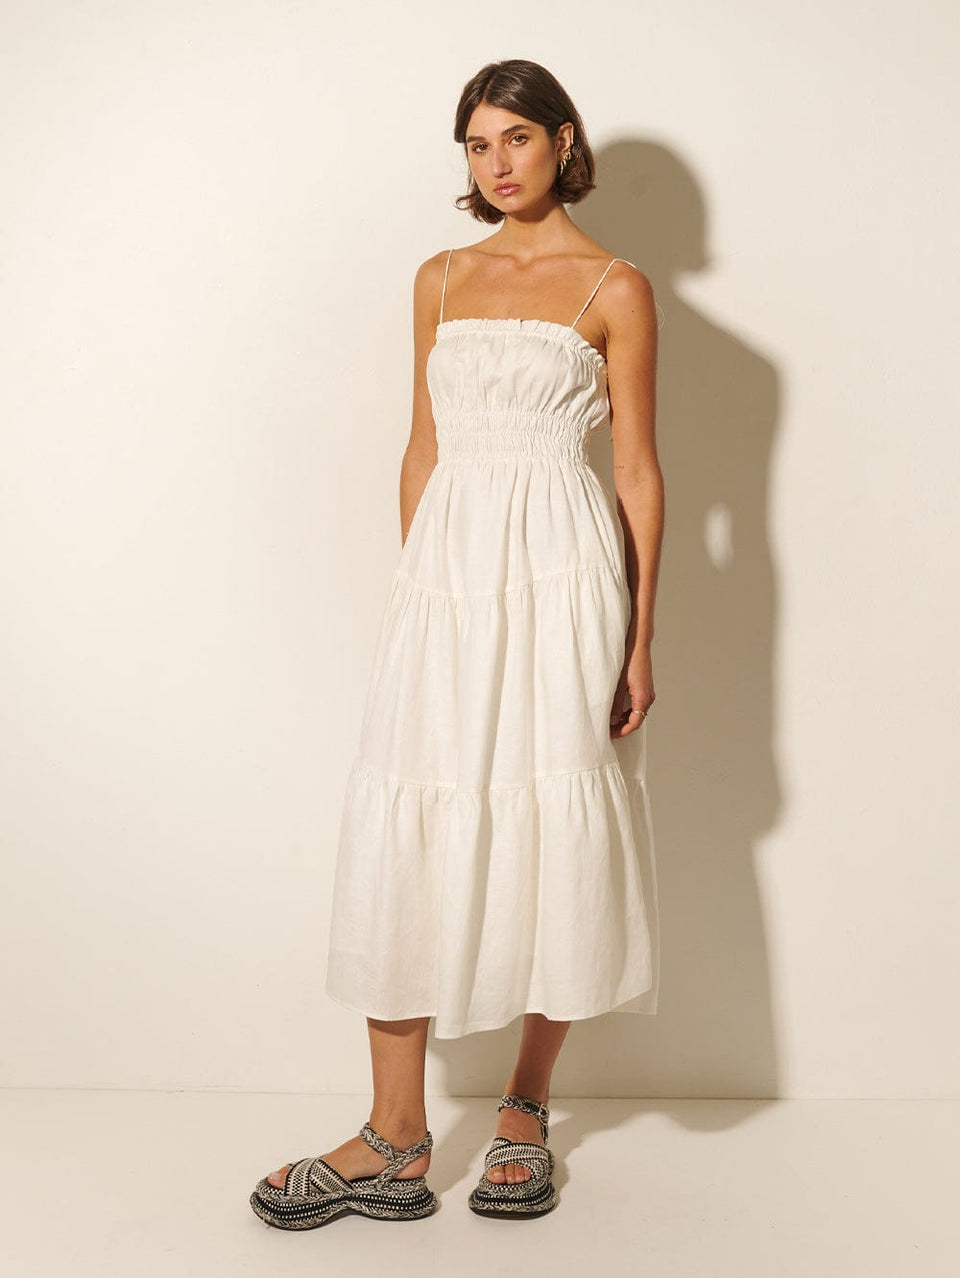 Corine Midi Dress KIVARI | Model wears ivory midi dress